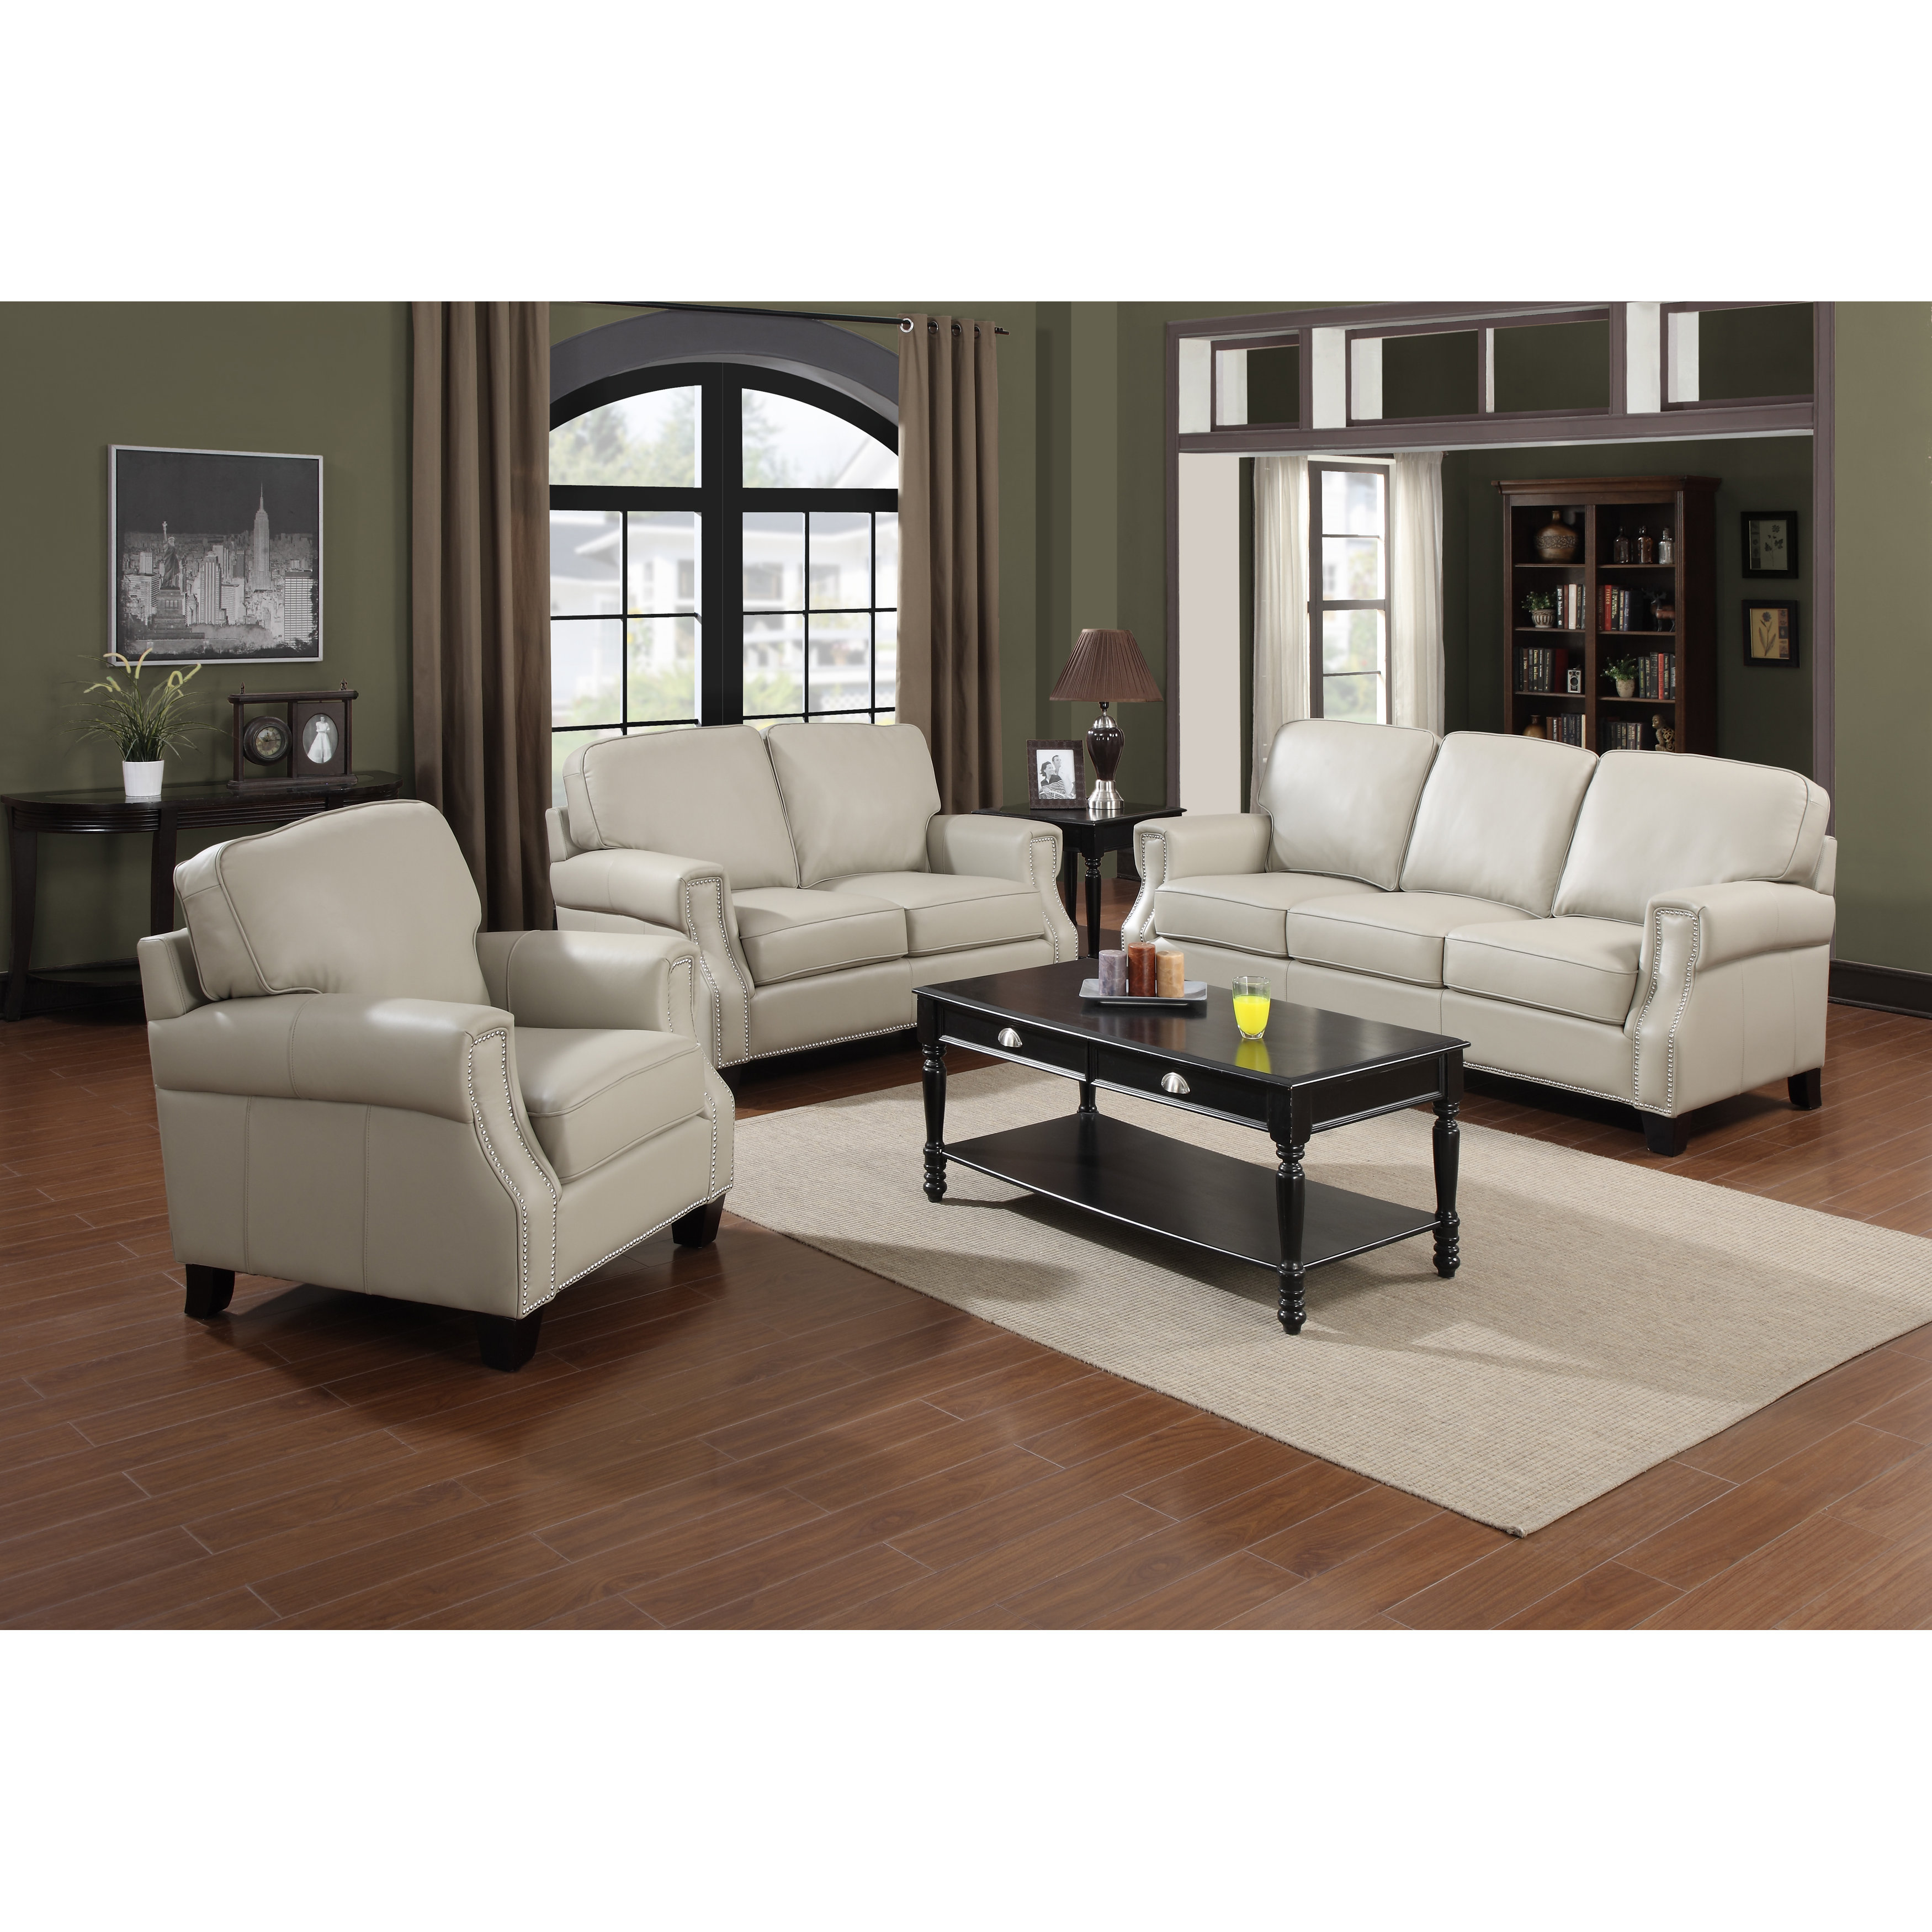  Living Room Furniture Wayfair 